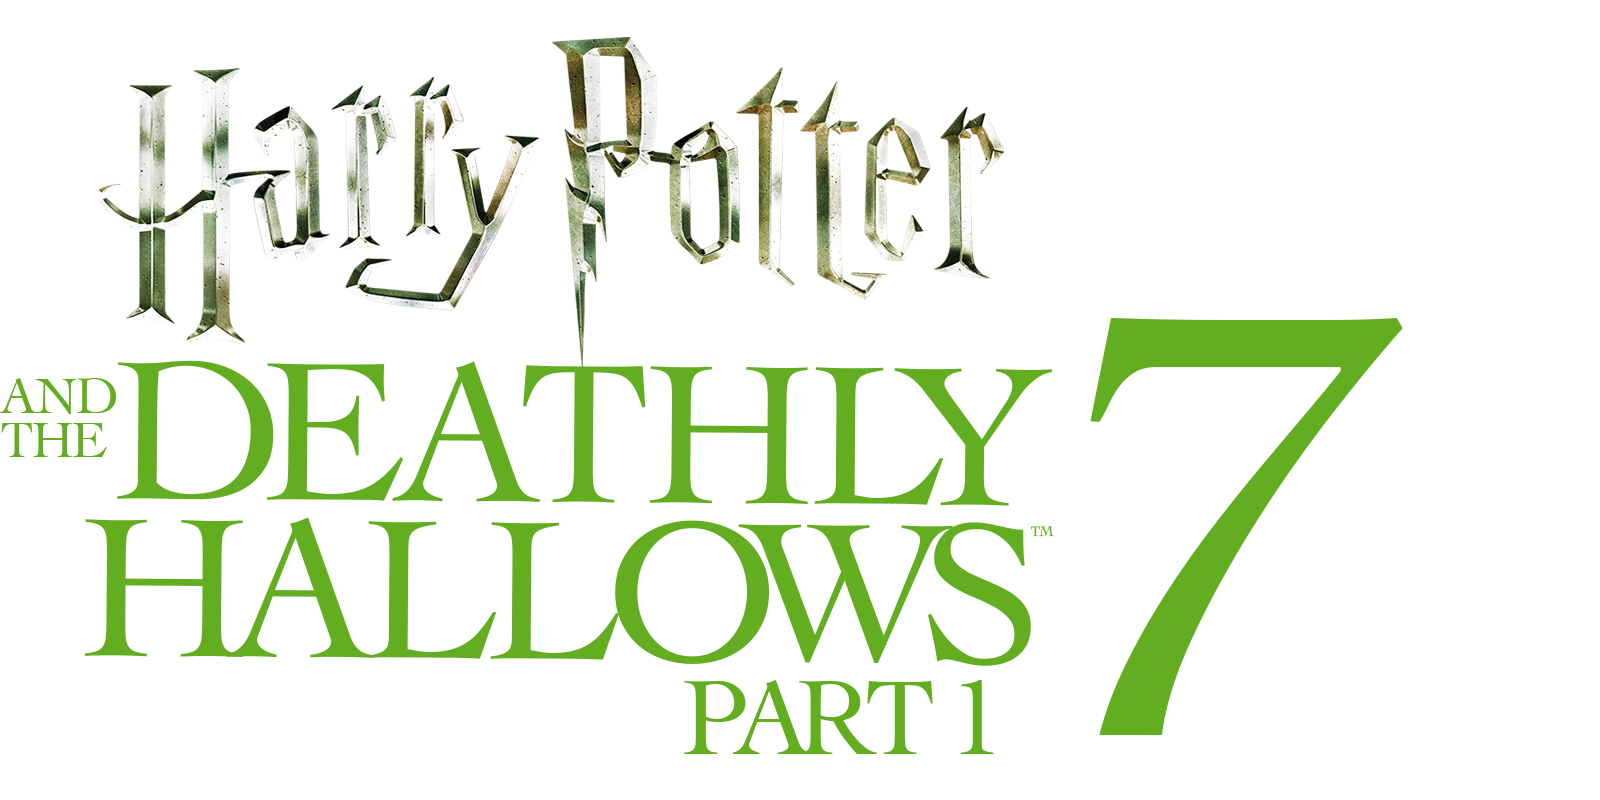 harry potter deathly hallows part 1 soundtrack